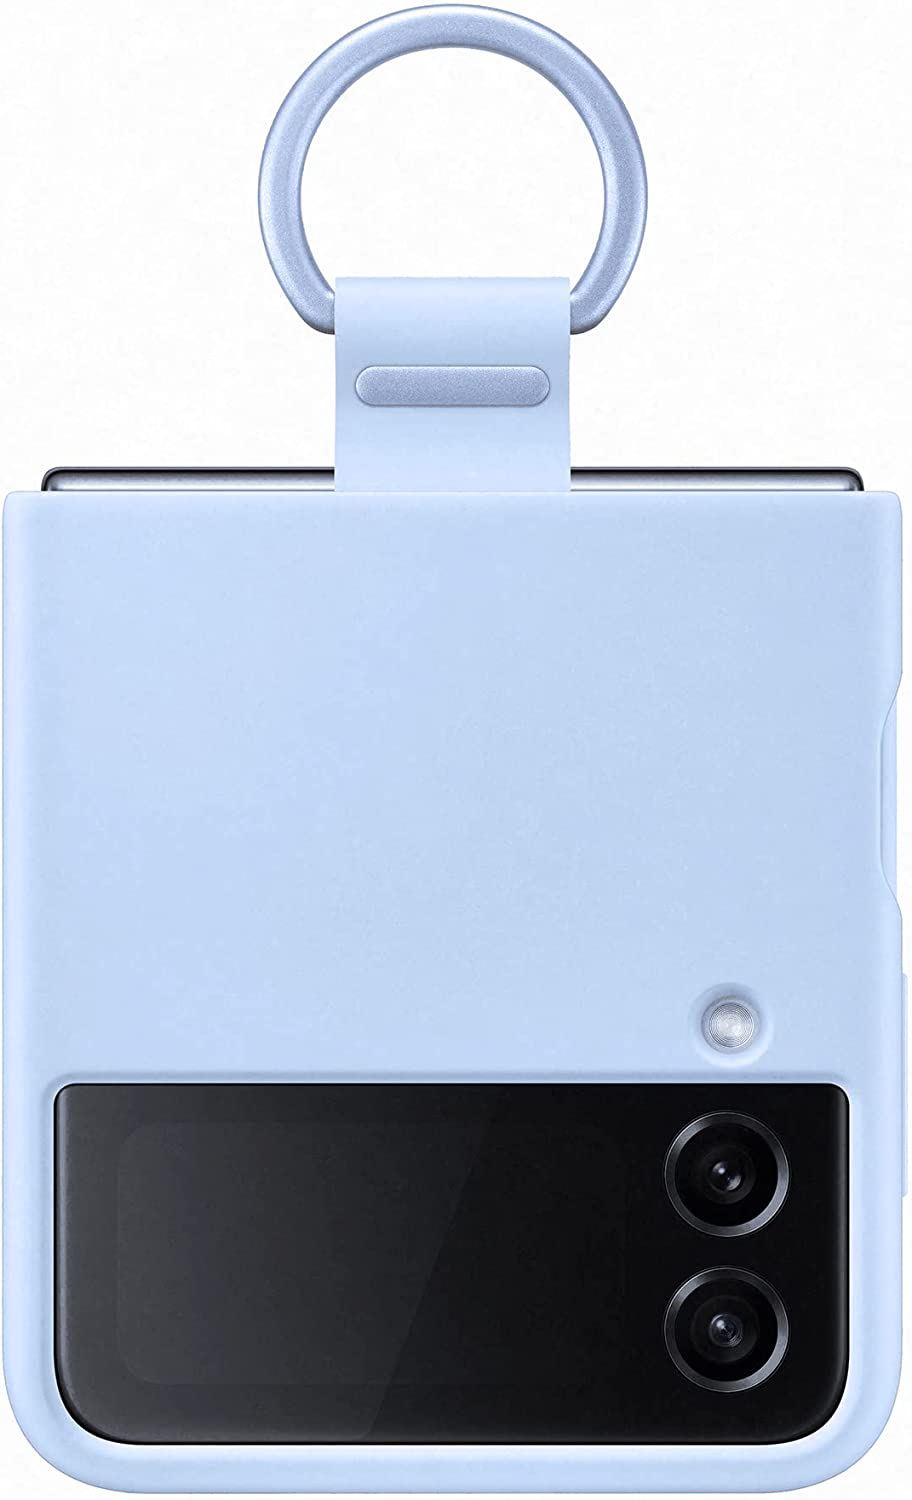 LOUIS VUITTON PATERN ICON LOGO BLUE Samsung Galaxy Z Flip 4 Case Cover